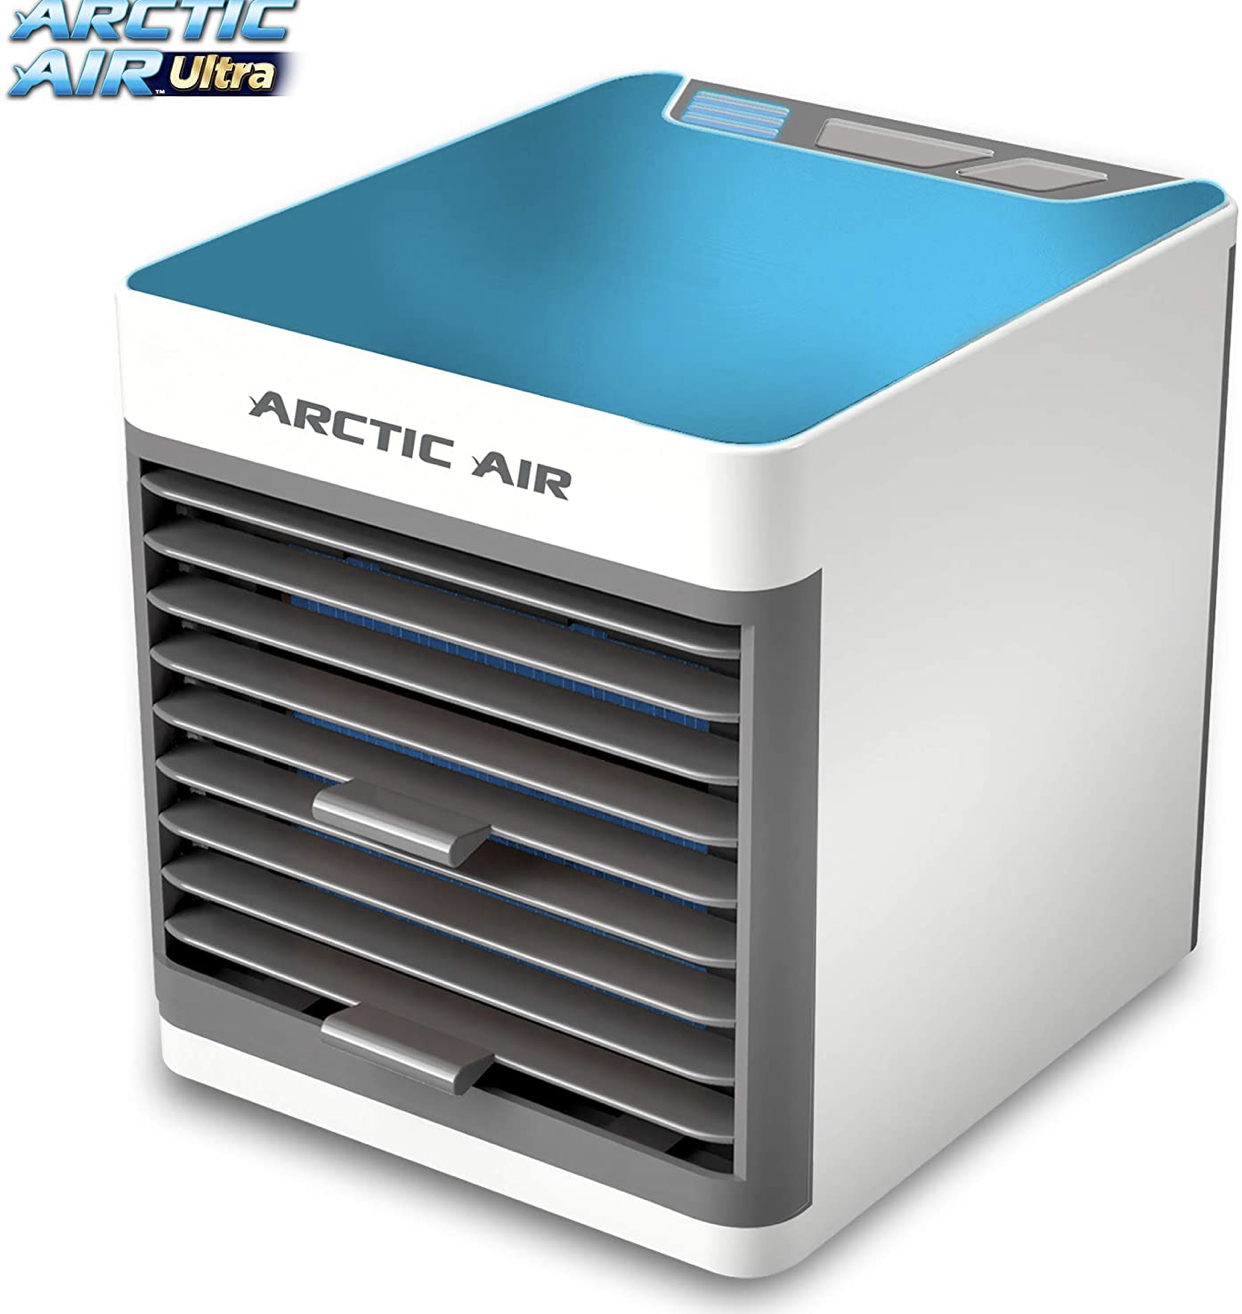 تهویه کننده هوا آرکتیک ایر اولترا Arctic Air Ultra air conditioner